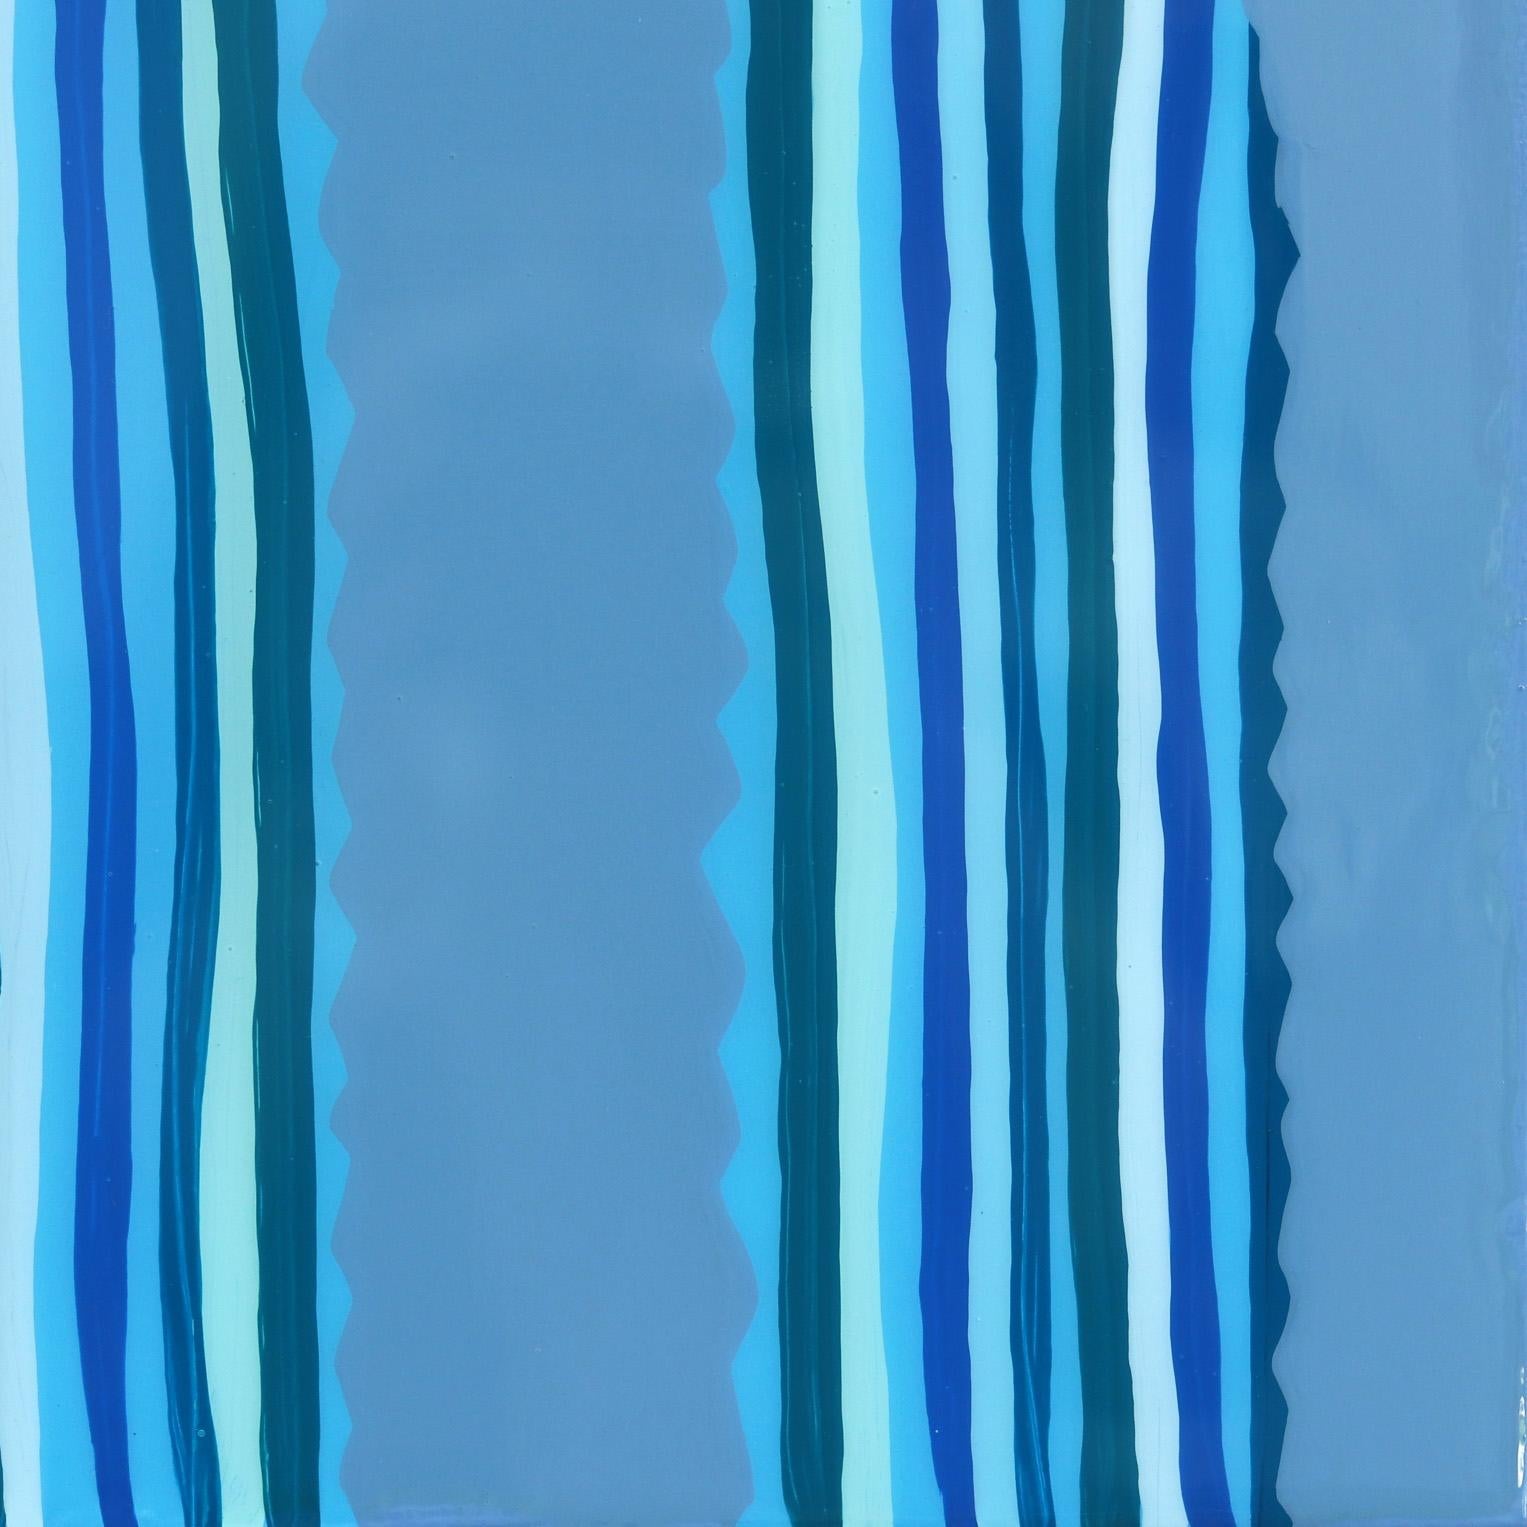 Sapphire- Vibrant Blue Southwest Inspired Pop Art Cactus Painting For Sale 6